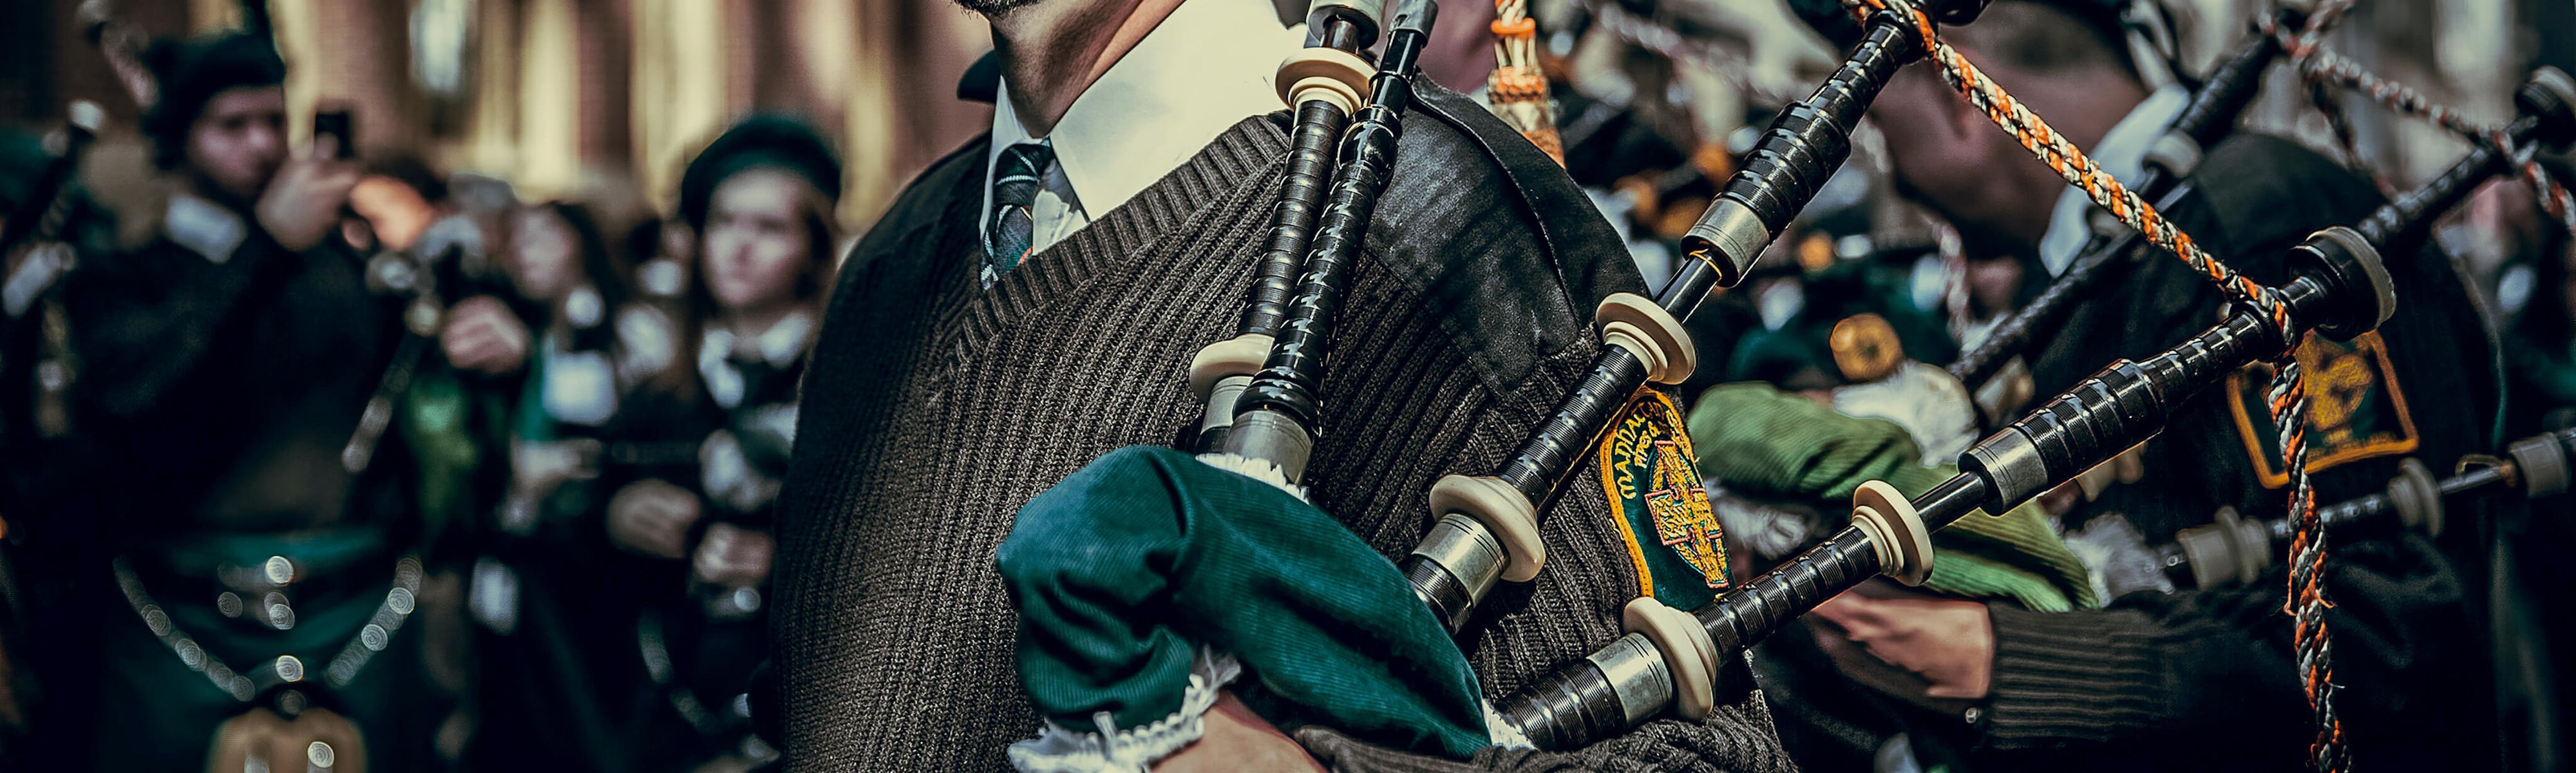 close up of irish man holding a bag pipe